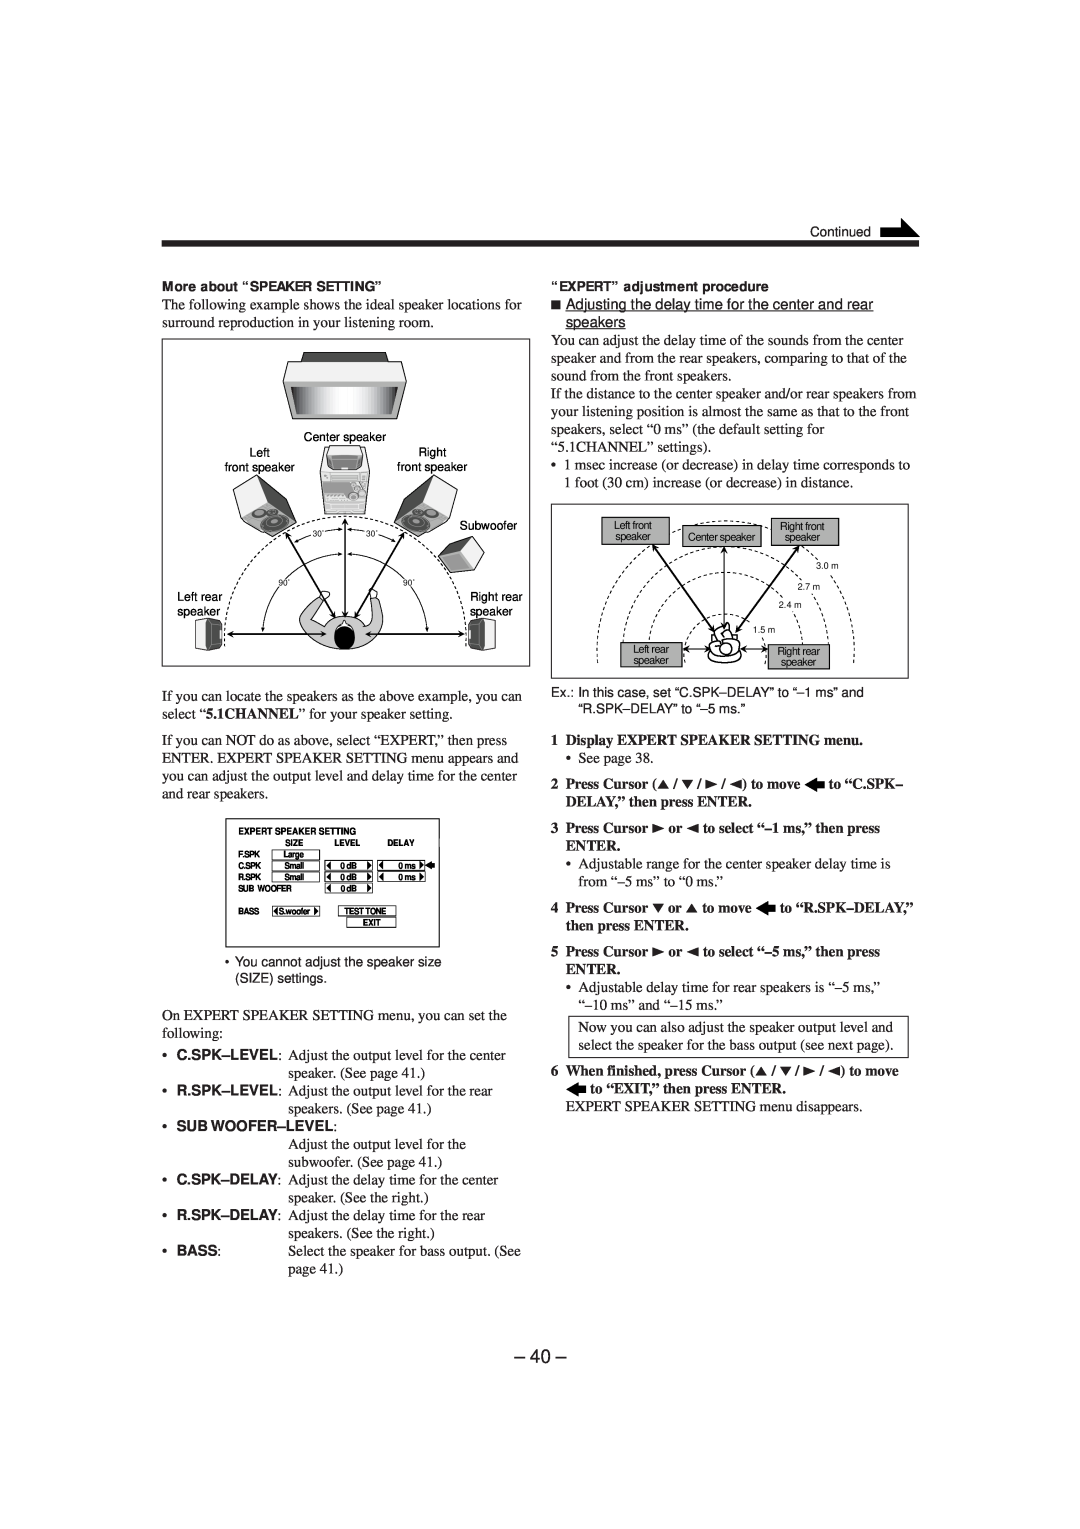 JVC GVT0057-016A manual More about “SPEAKER SETTING”, “EXPERT” adjustment procedure, Sub Woofer-Level, to “C.SPK, Enter 